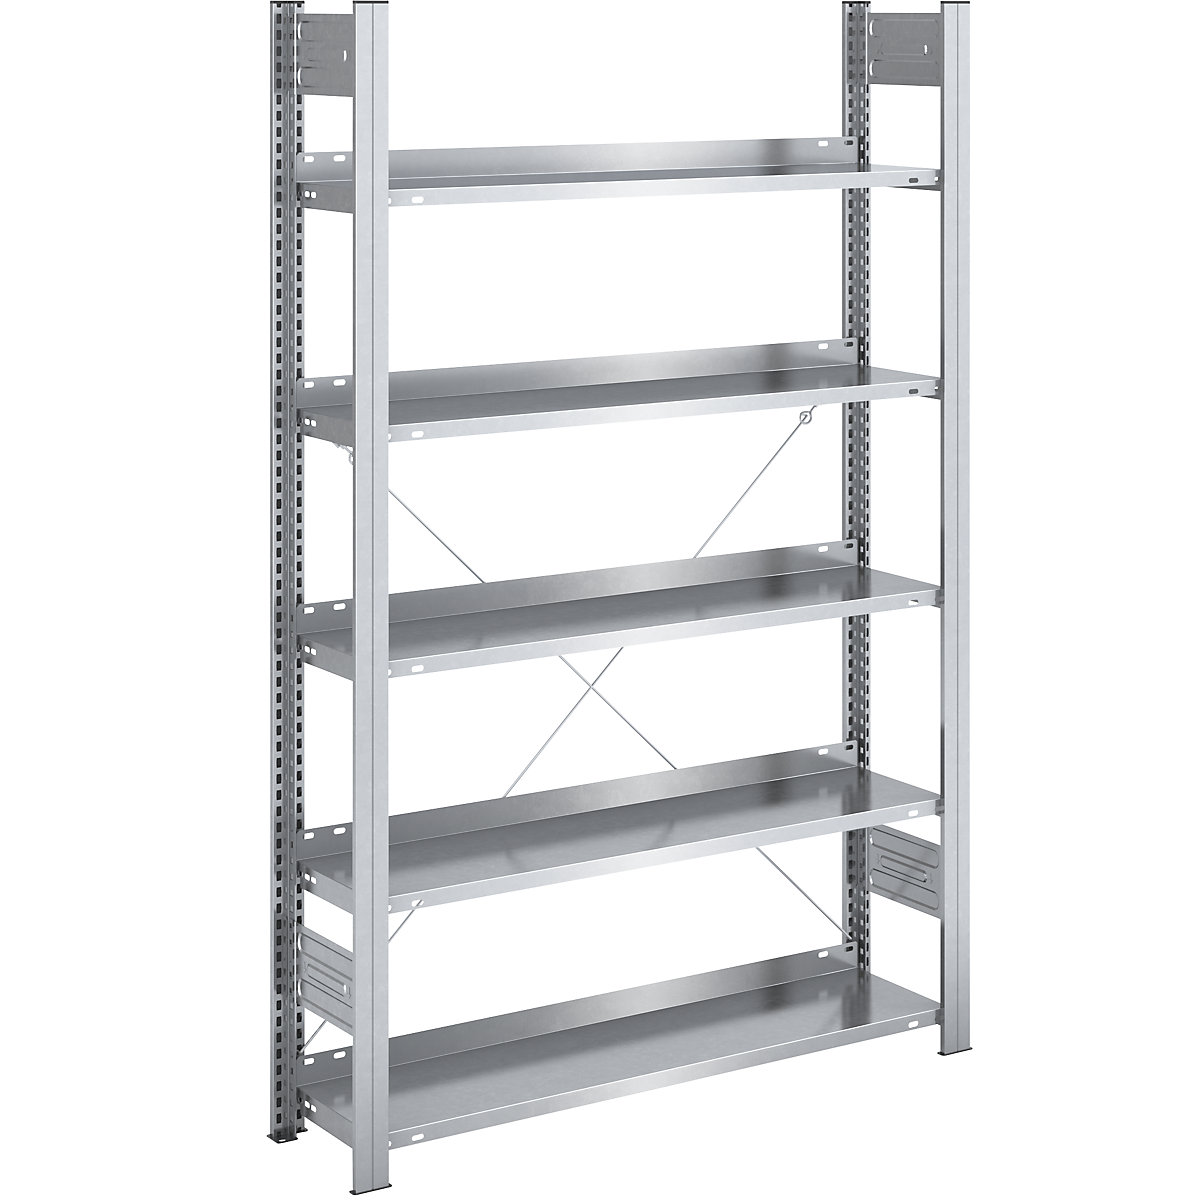 Boltless filing shelf unit, zinc plated – hofe, shelf height 1750 mm, single sided, standard shelf unit, WxD 1000 x 300 mm-5